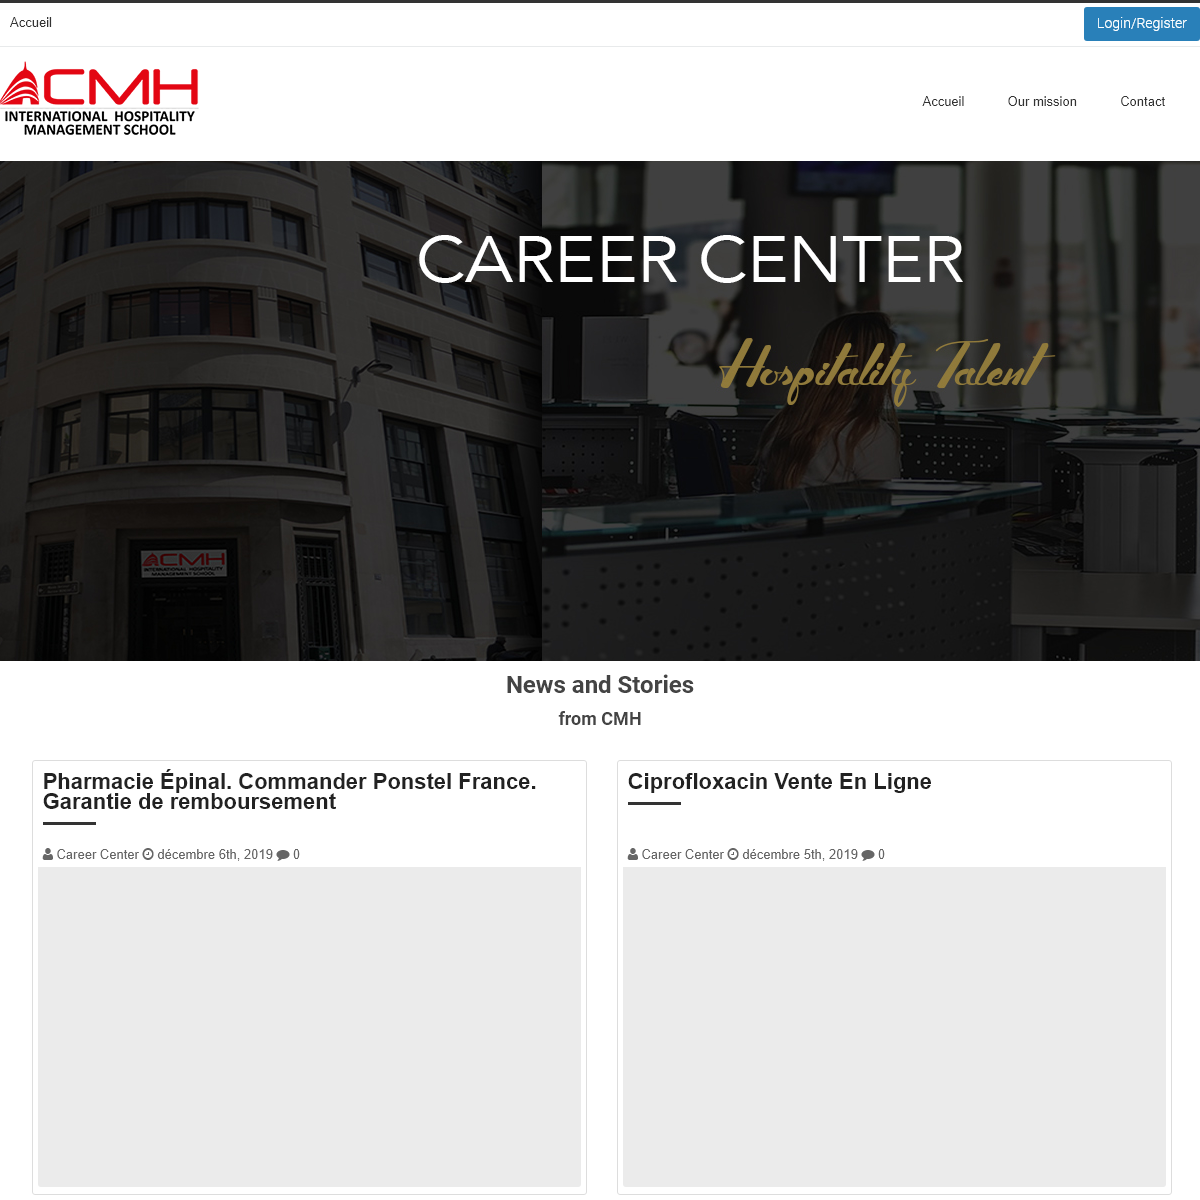 A complete backup of careercenter-cmh.com